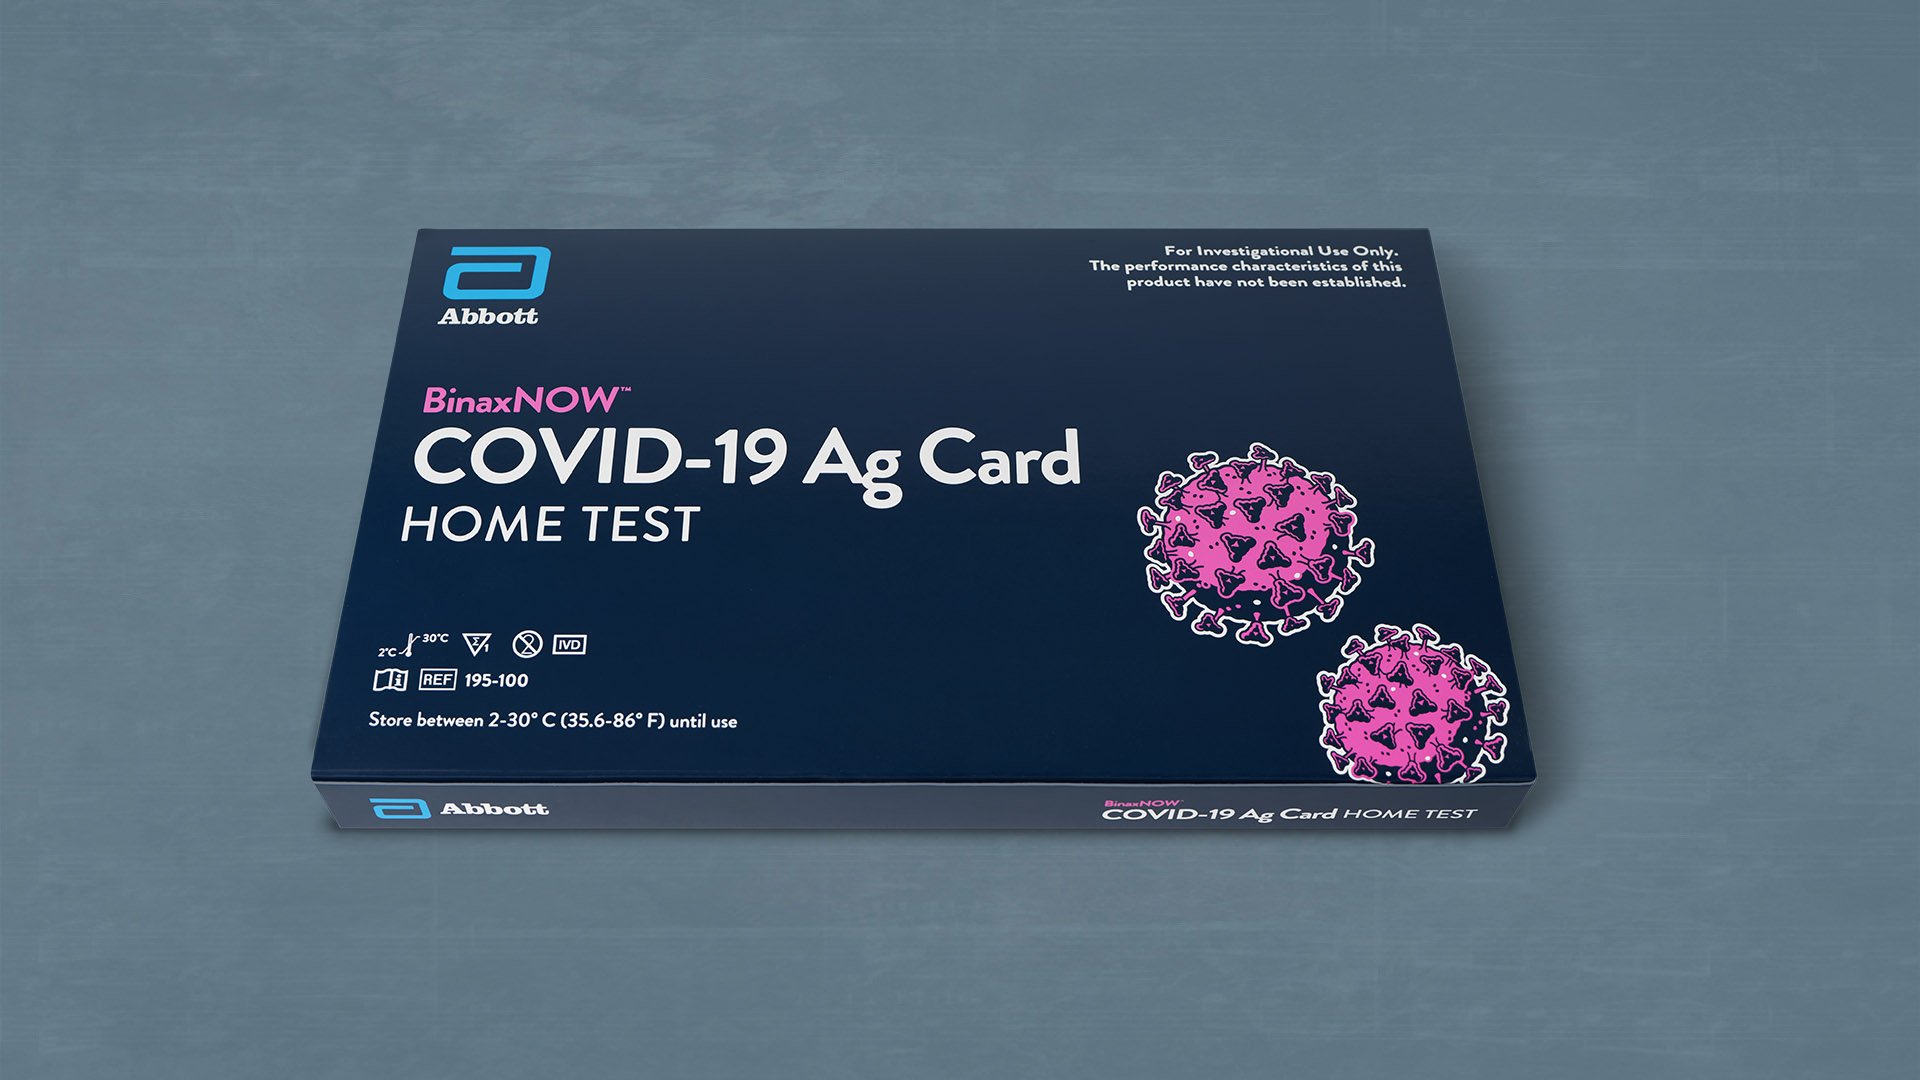 Royal Caribbean now accepts CDC-approved at-home COVID-19 tests | Royal Caribbean Blog